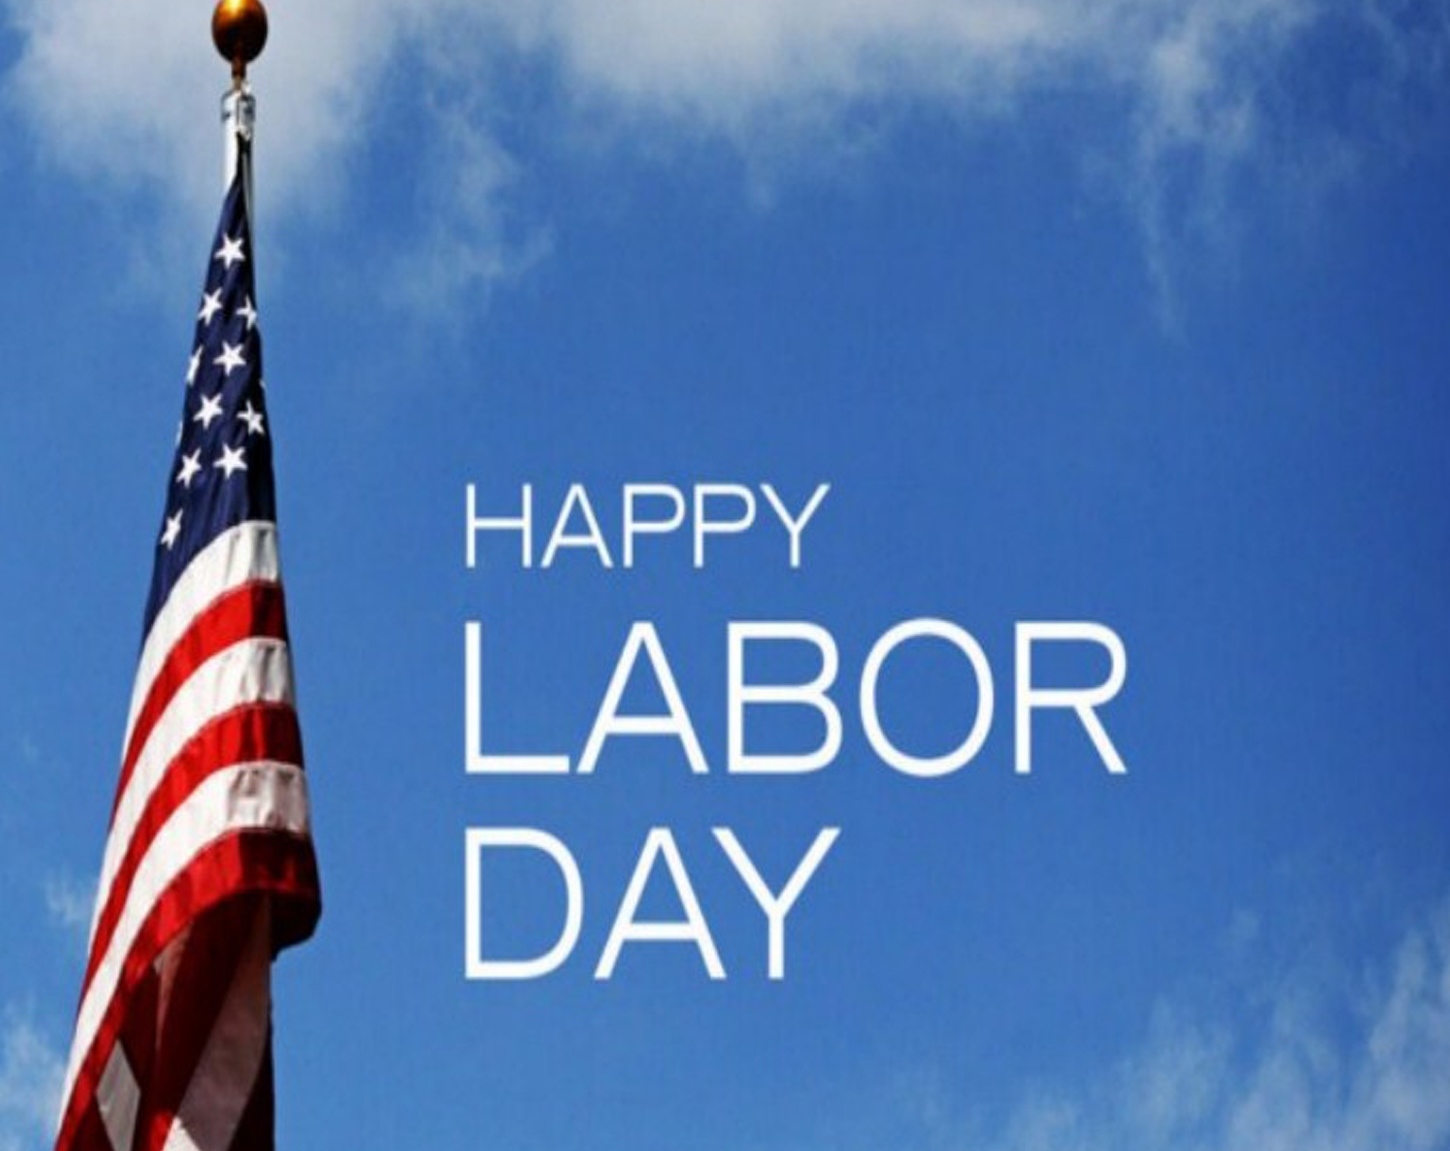 Laborday - Happy Labor Day Flag - HD Wallpaper 